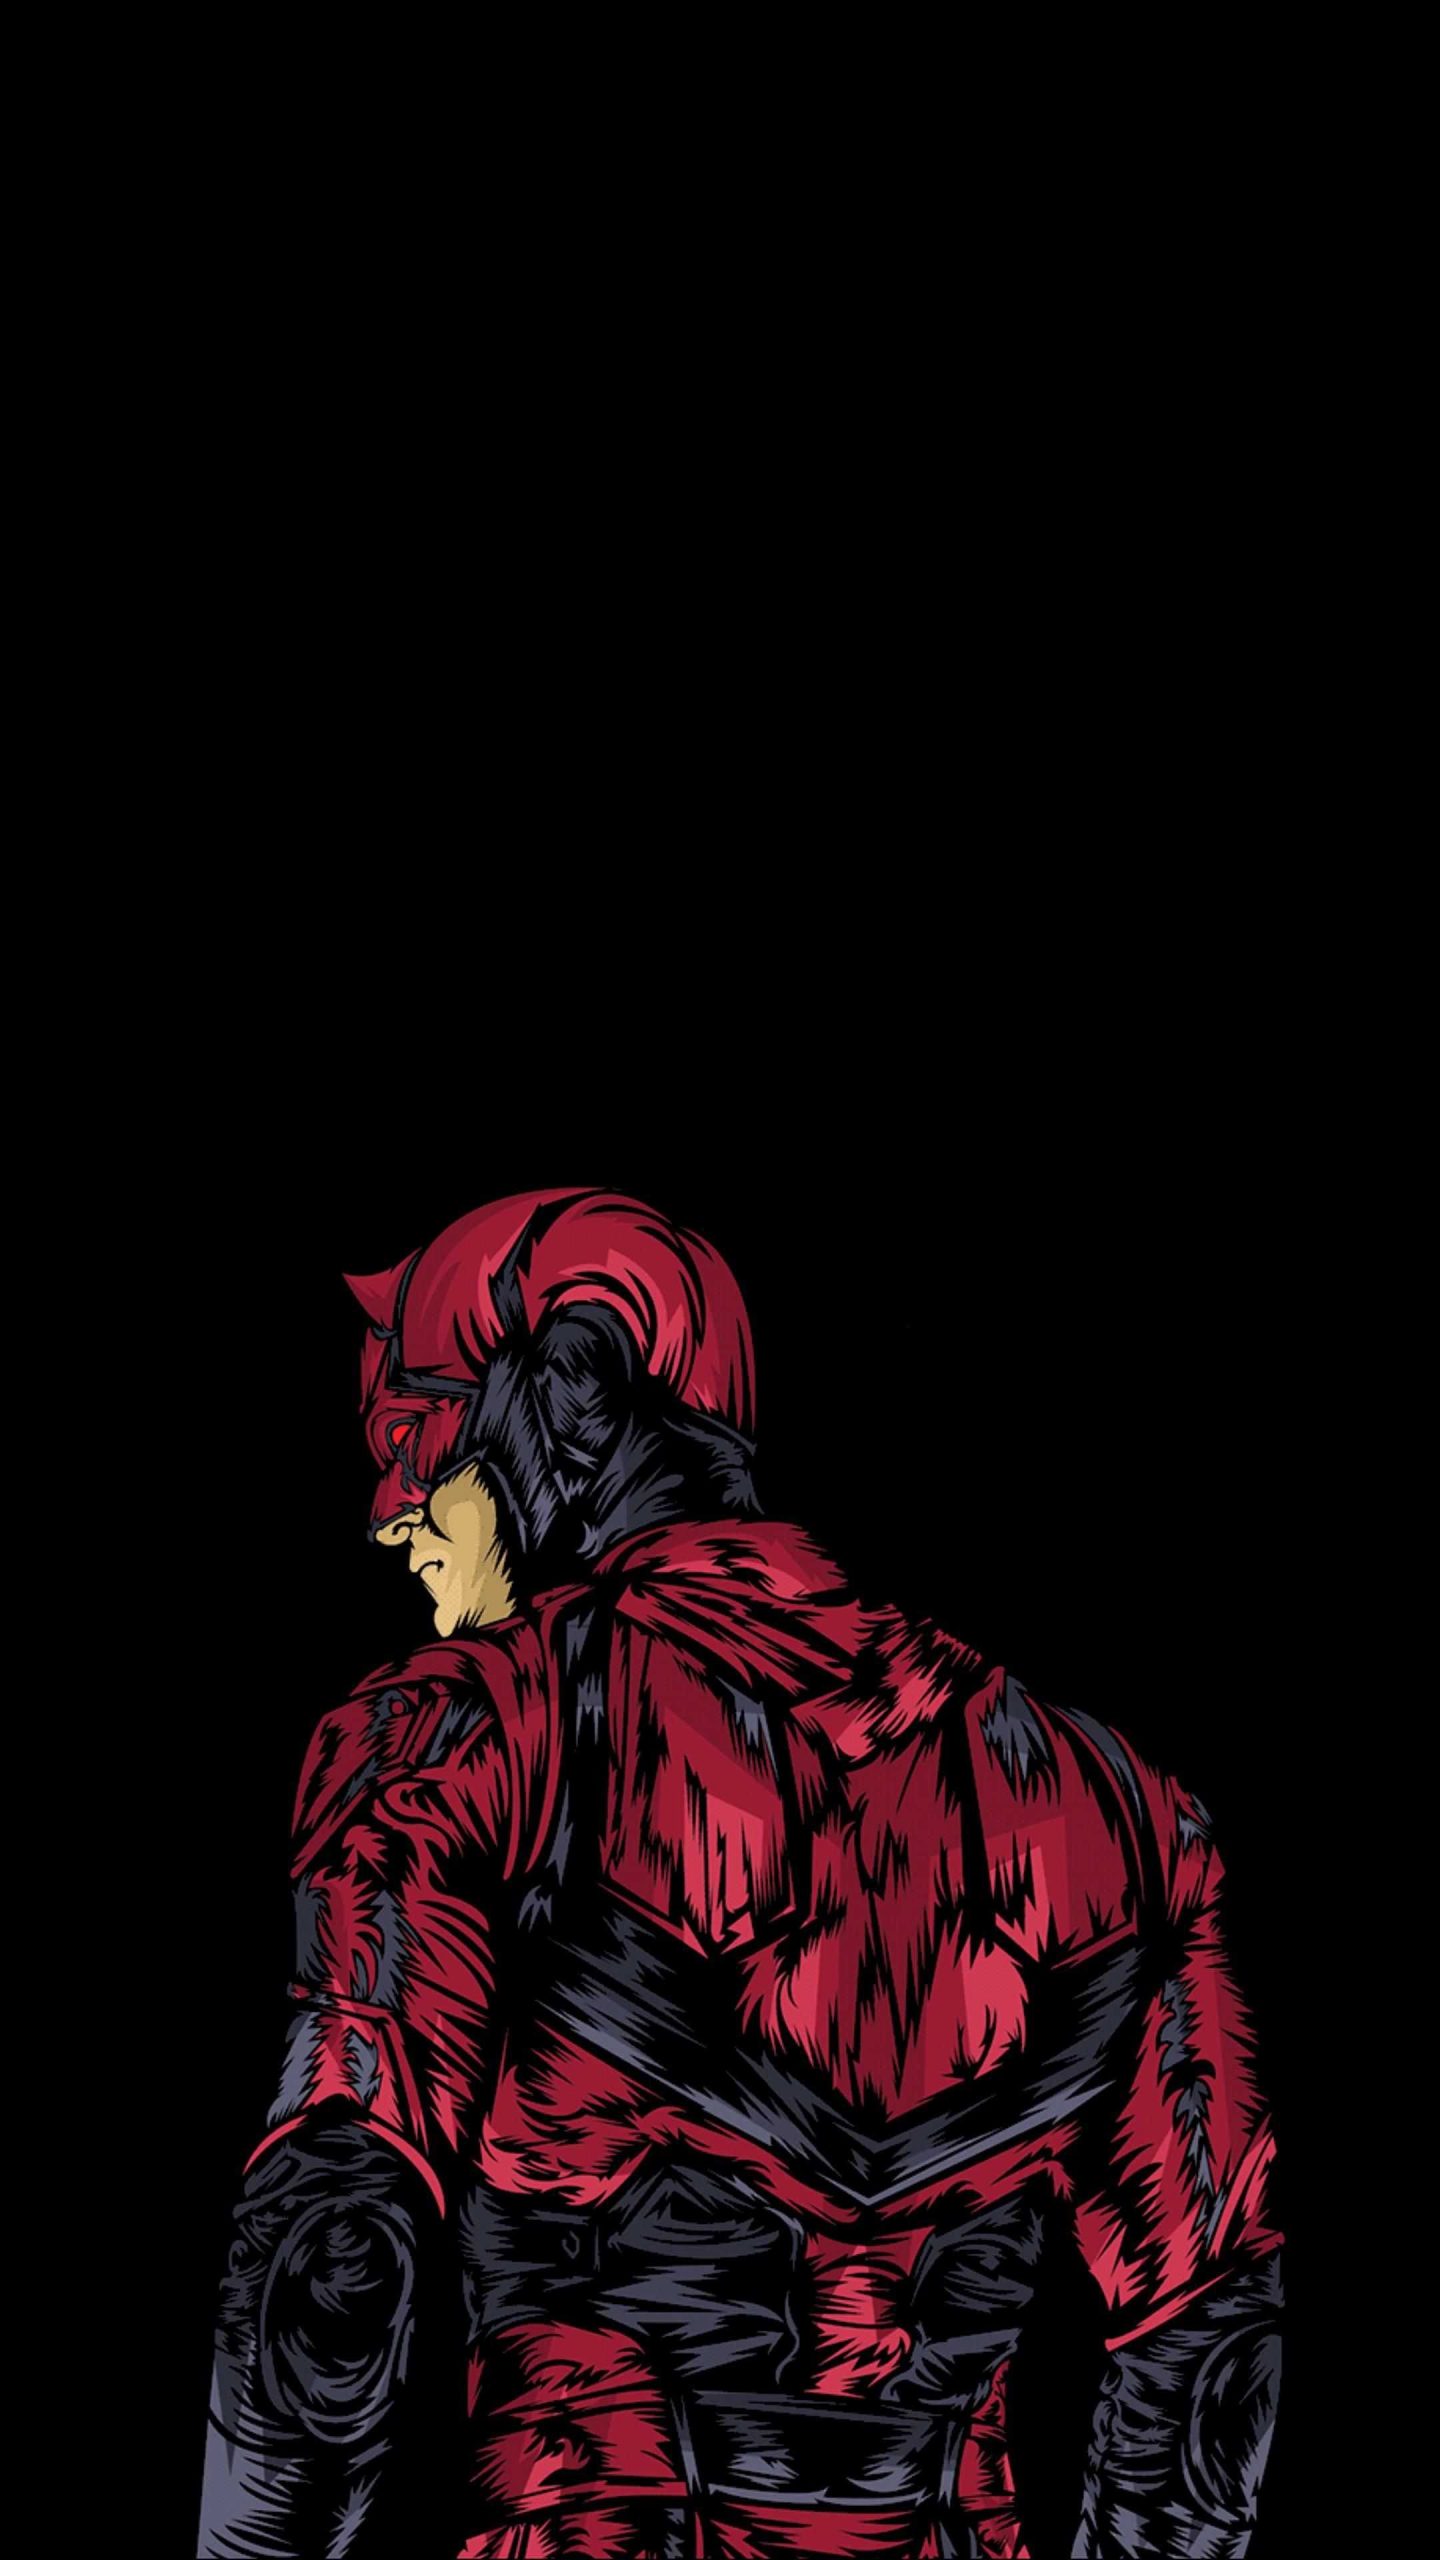 Background Daredevil Wallpaper